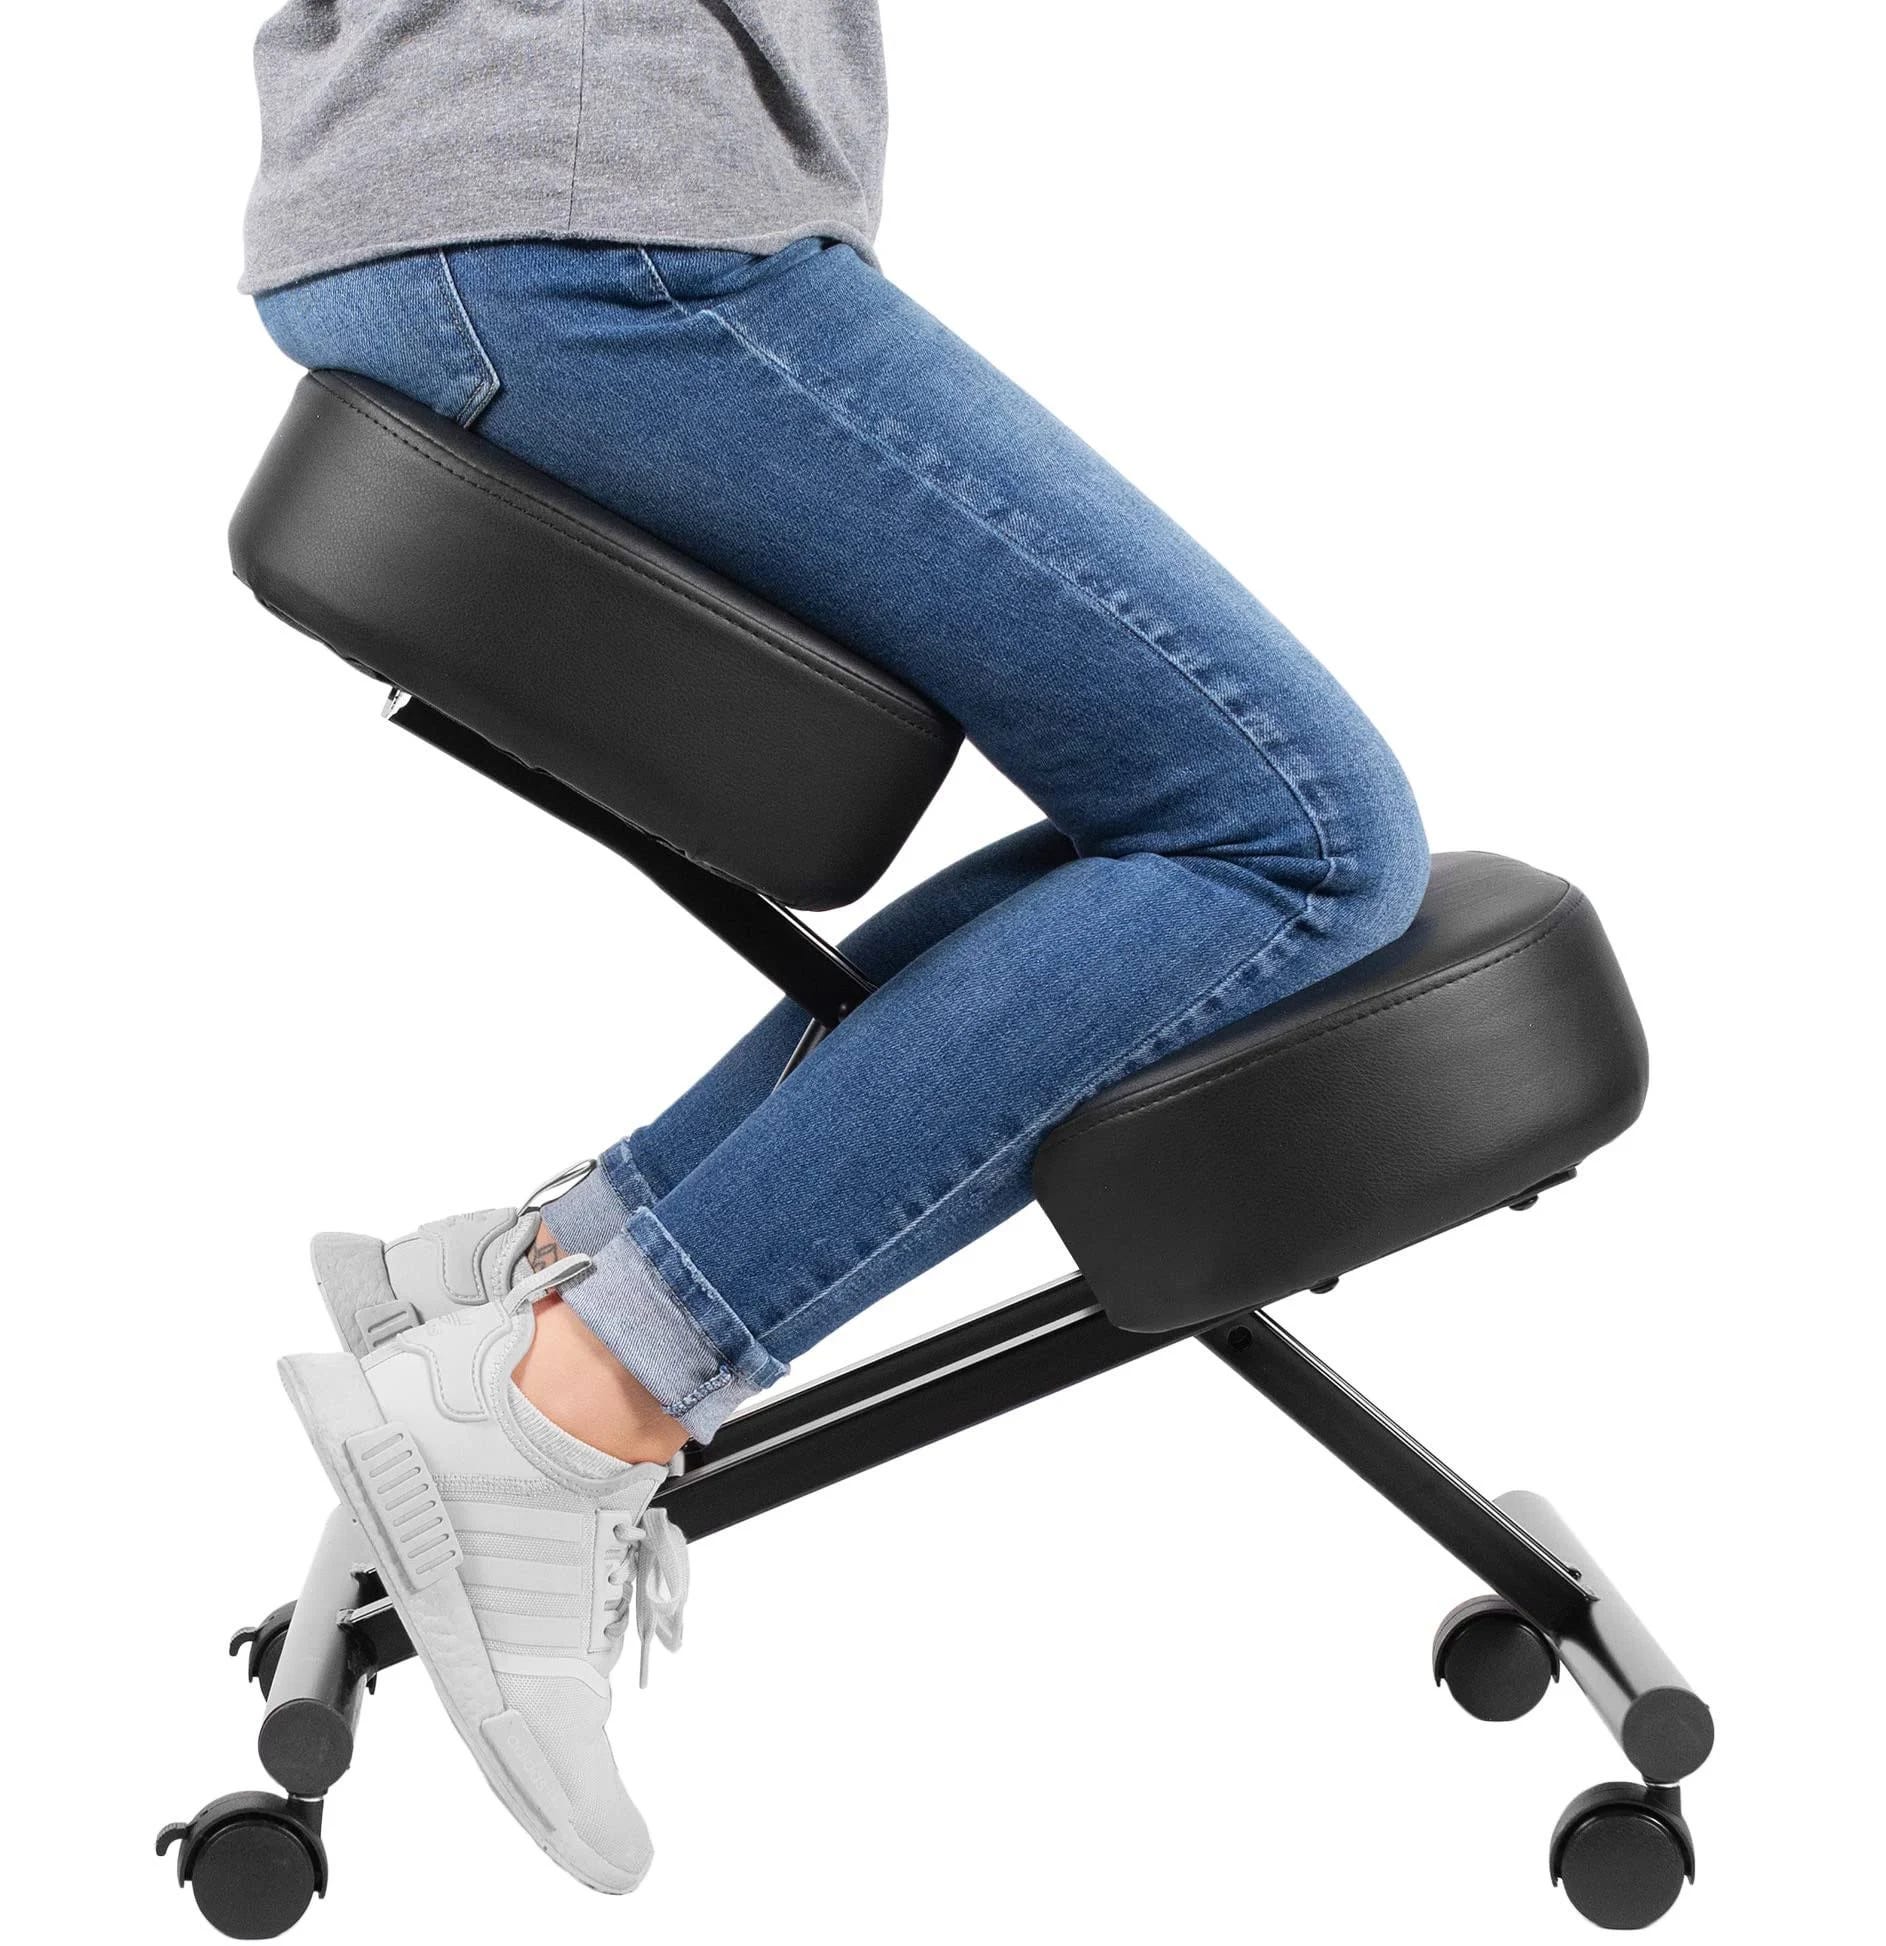 Dragonn Ergonomic Kneeling Chair for Comfort and Back Support | Image